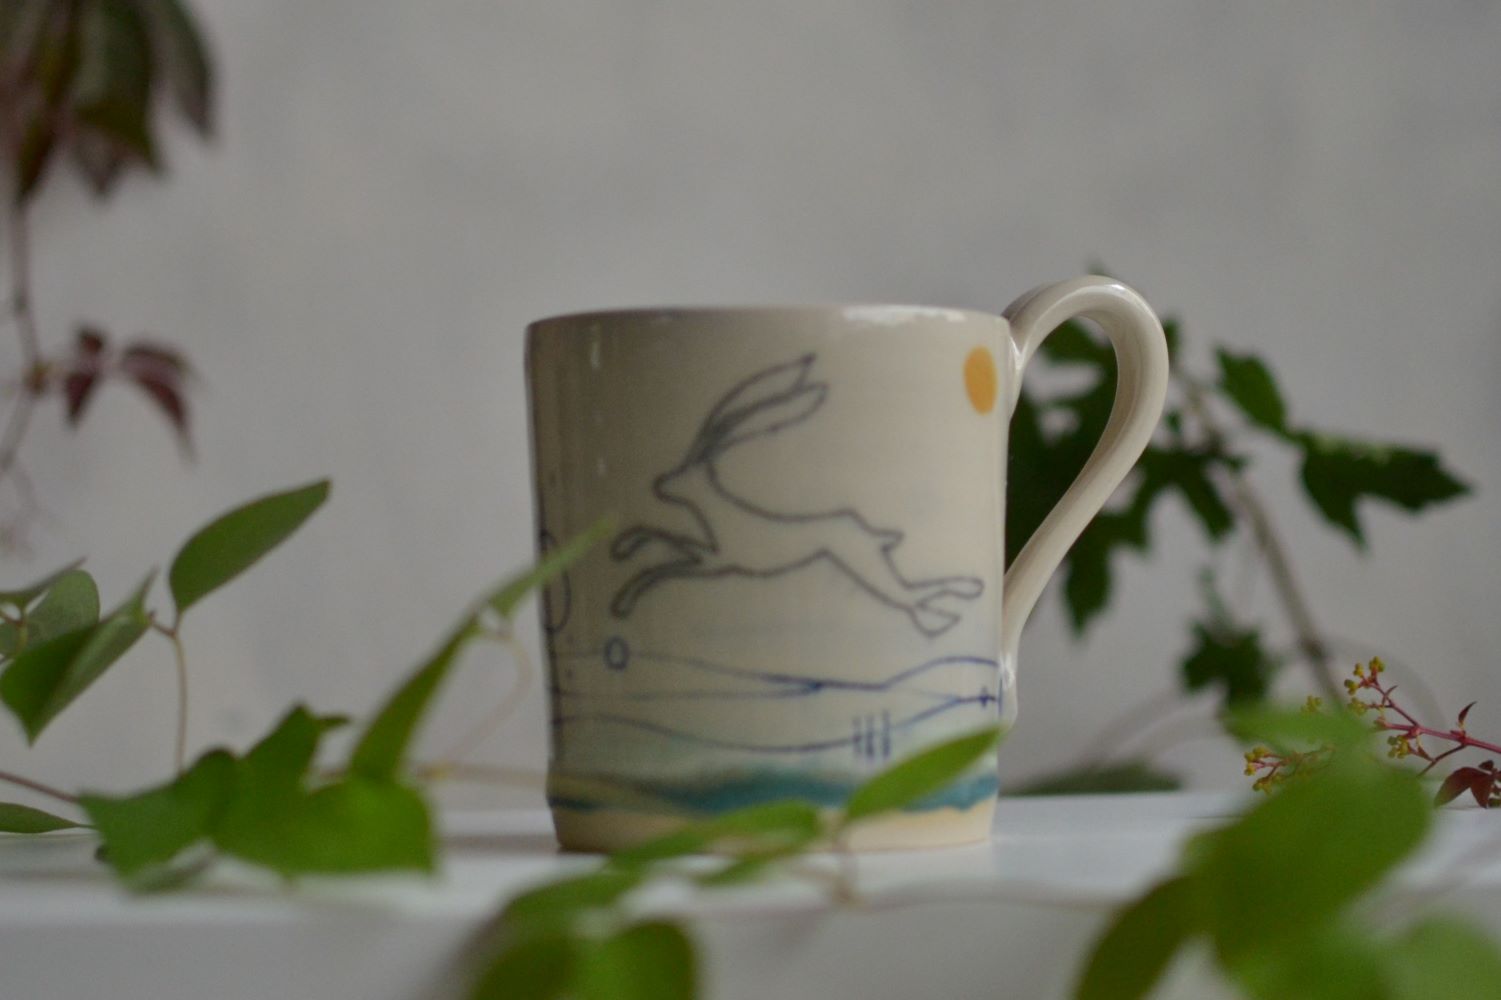 Handmade ceramic mug with a hare running across it.